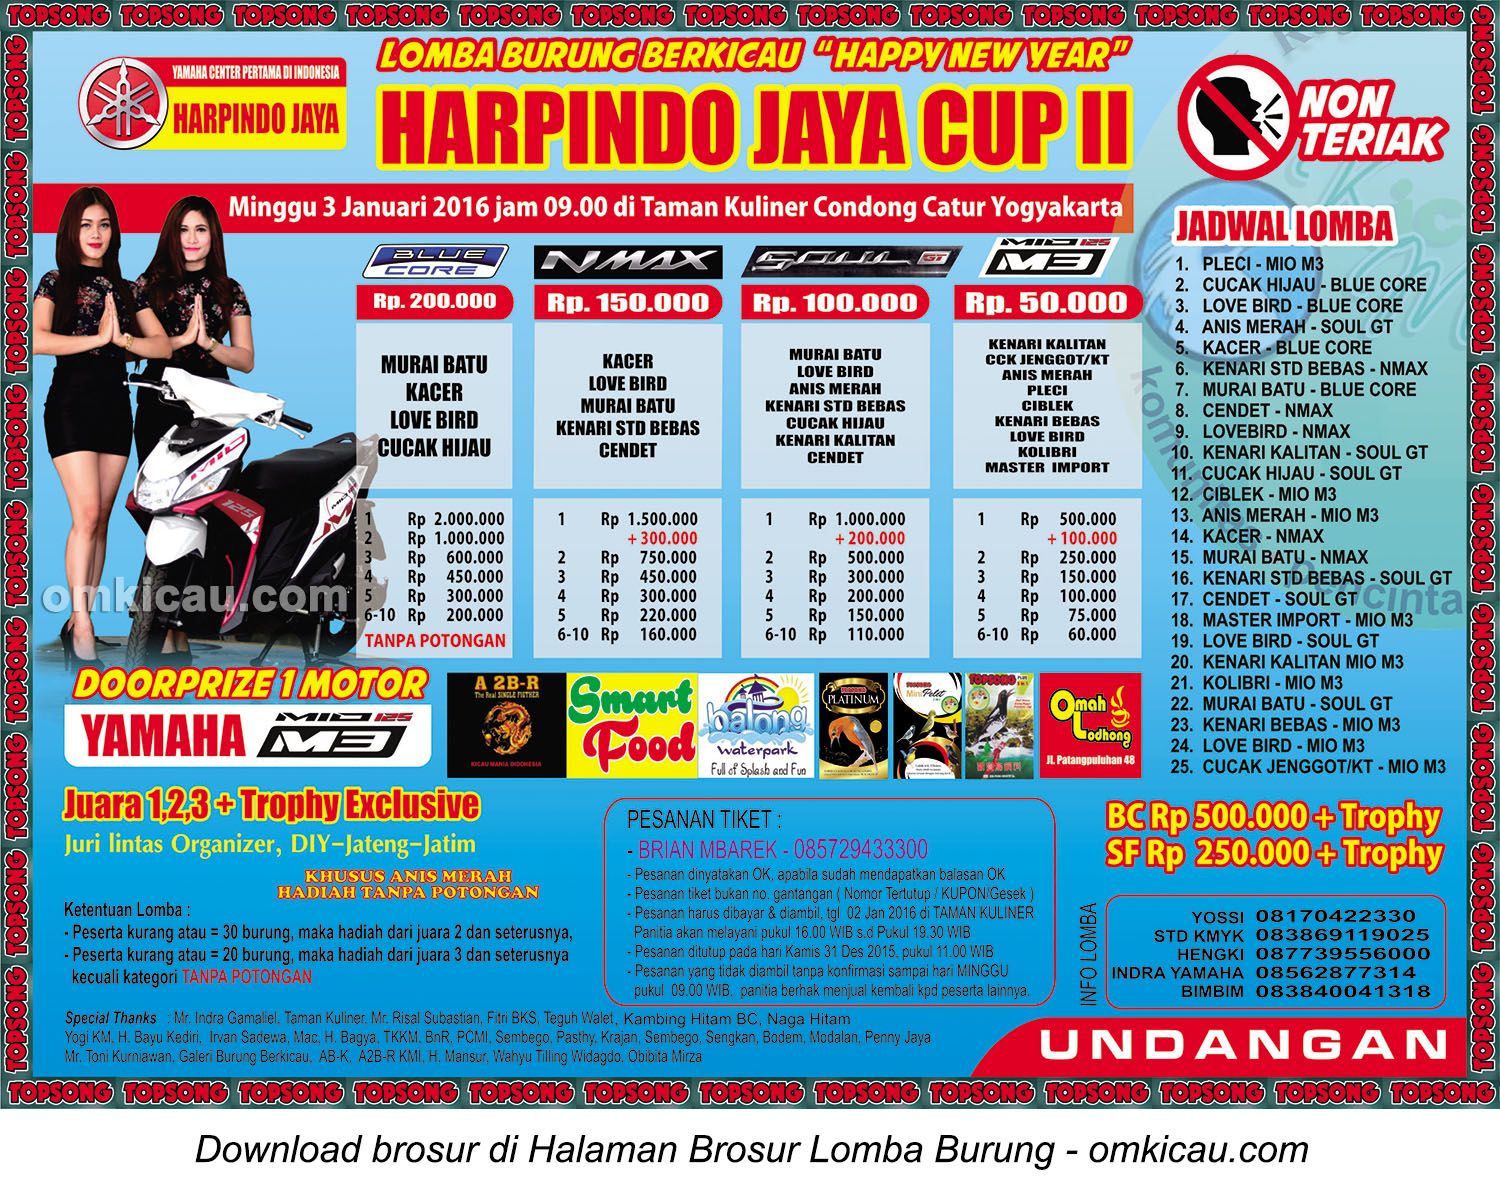 Brosur Lomba Burung Berkicau Harpindo Jaya Cup II, Jogja, Minggu 3 Januari 2016